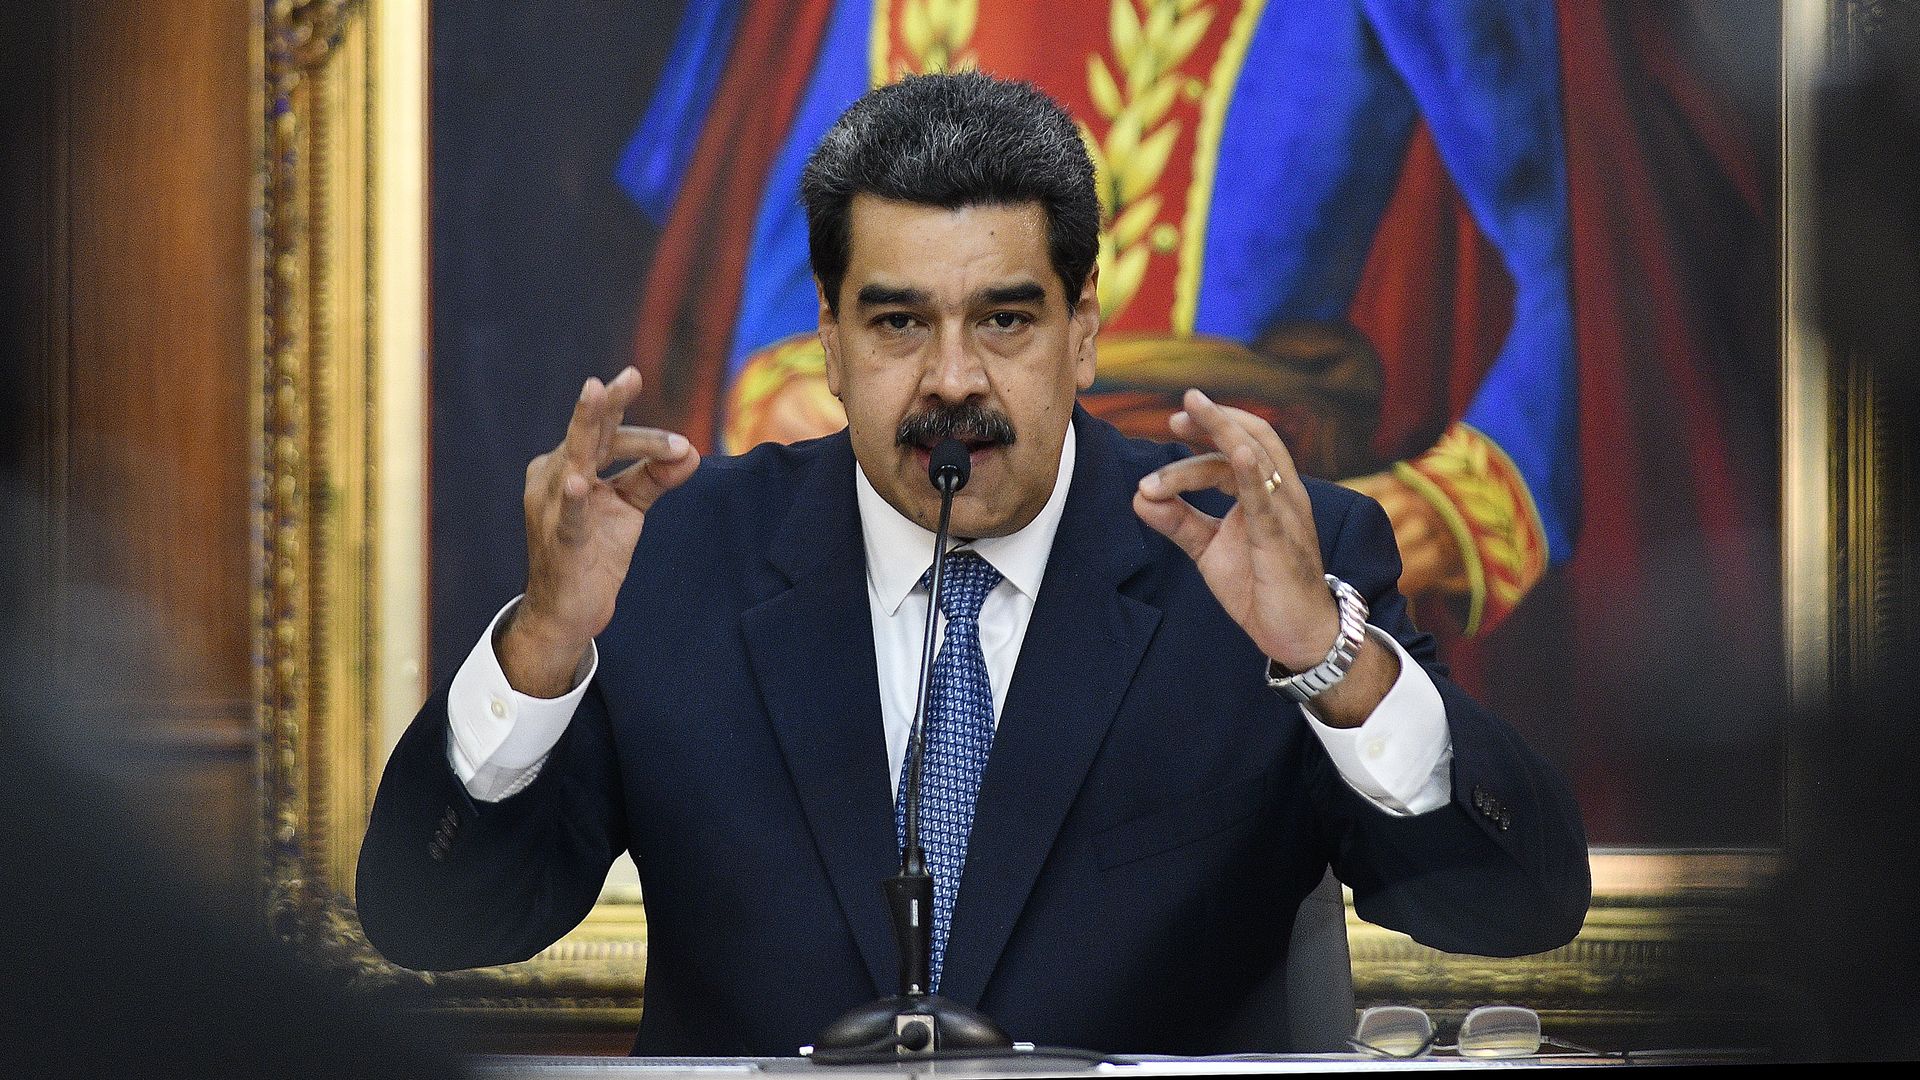 Nicolas Maduro speaking at a lectern